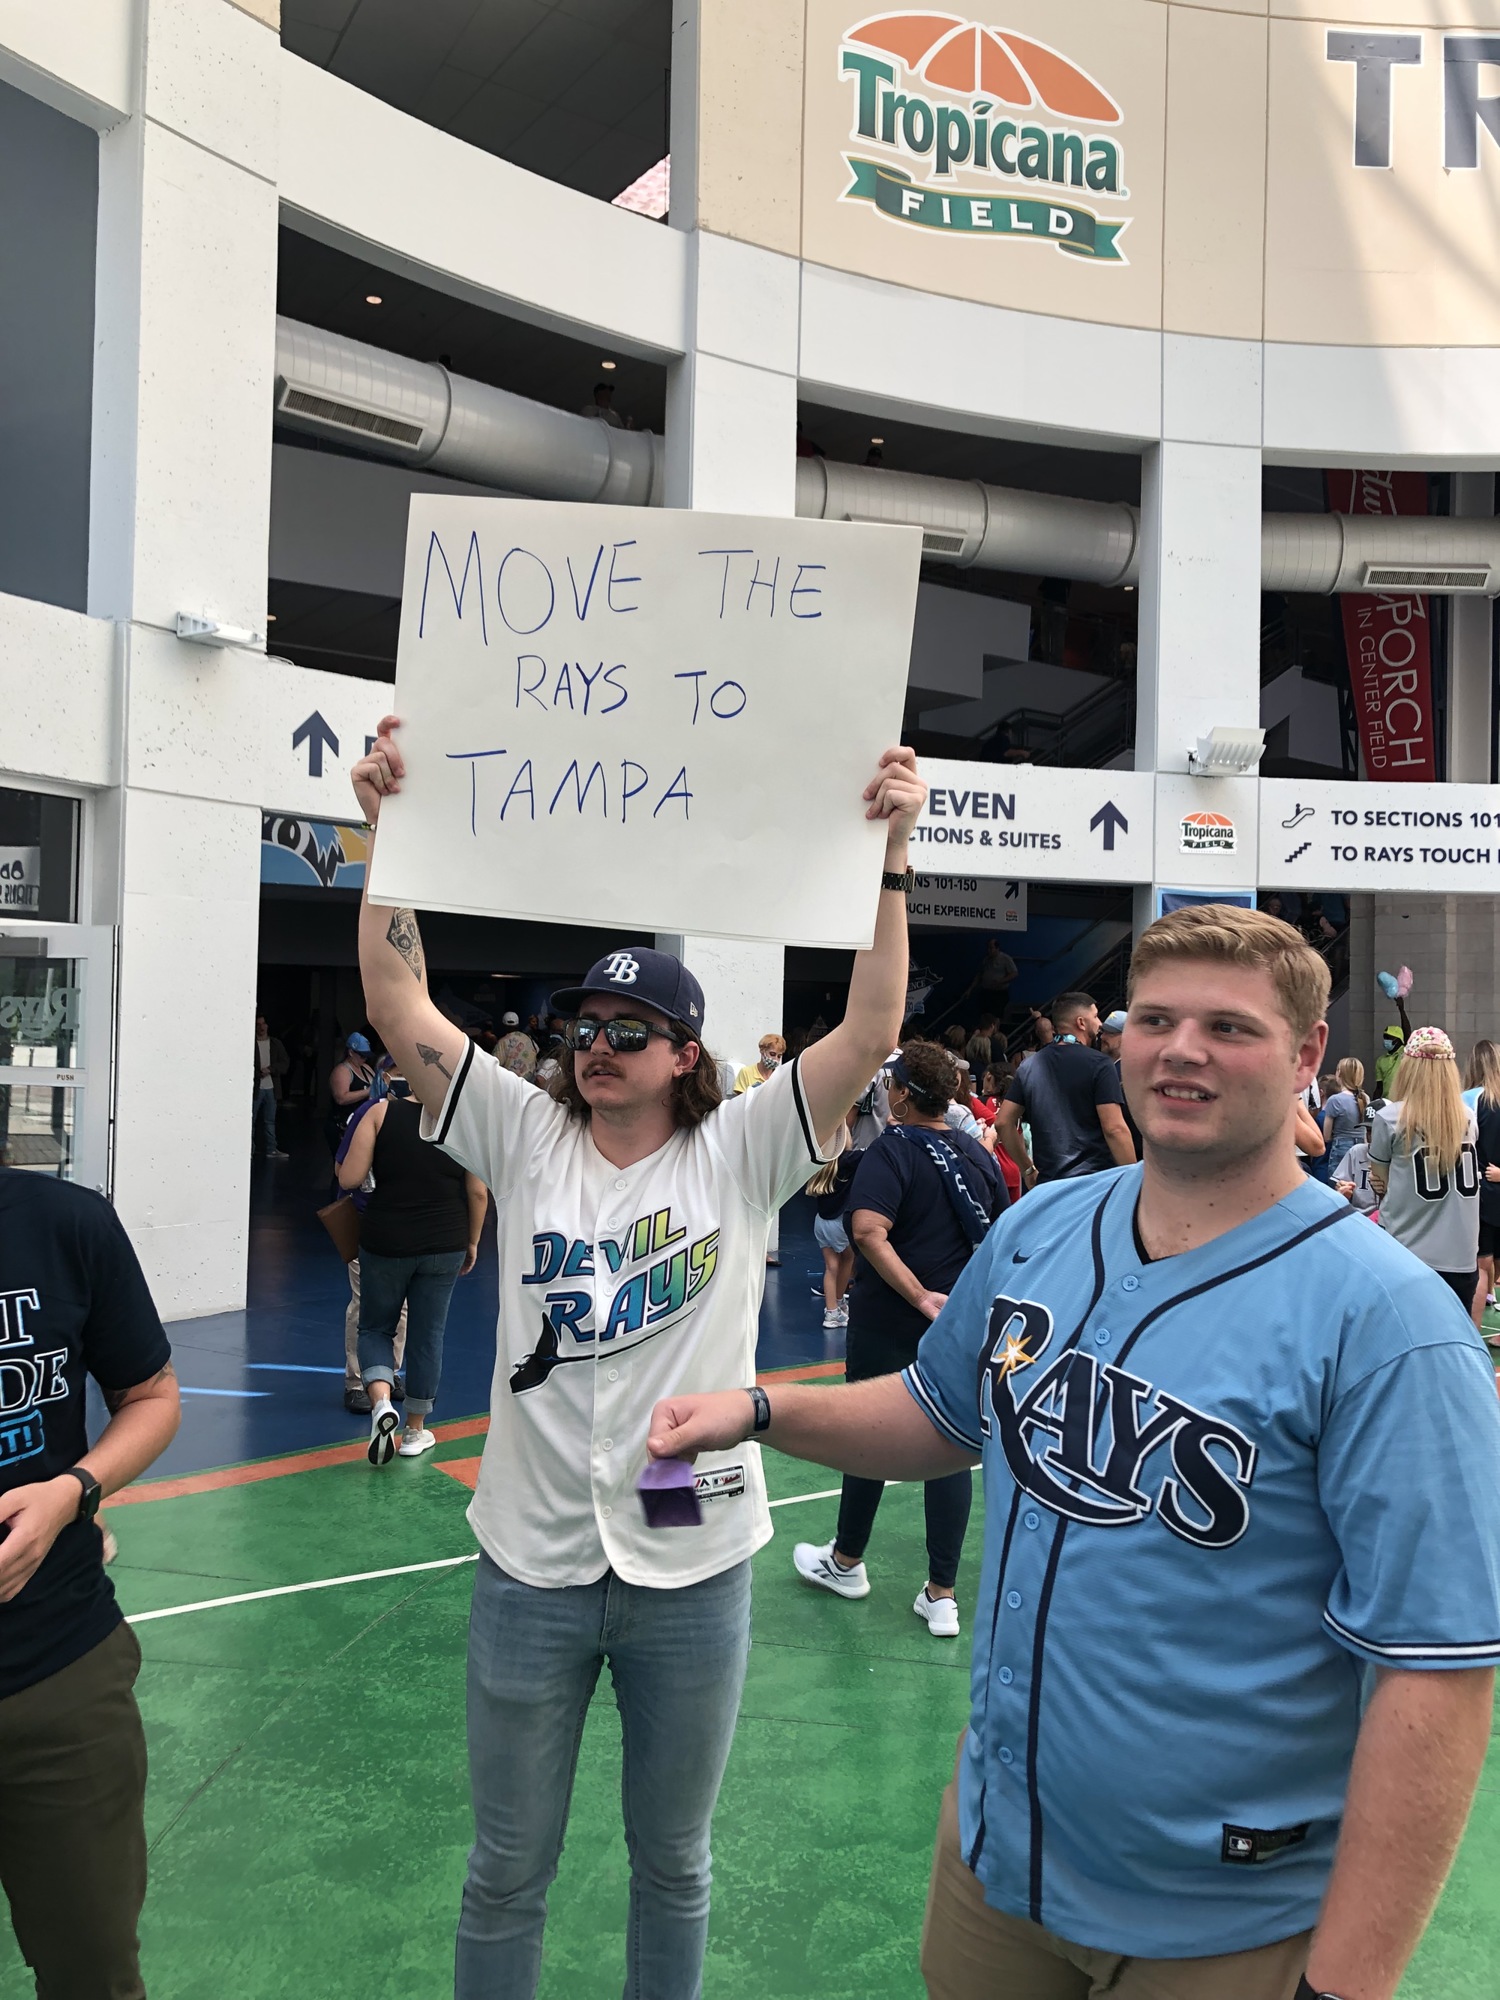 LOUIS LLOVIO: Fans inside Tropicana Field Sept. 26  demand the team move to Tampa.